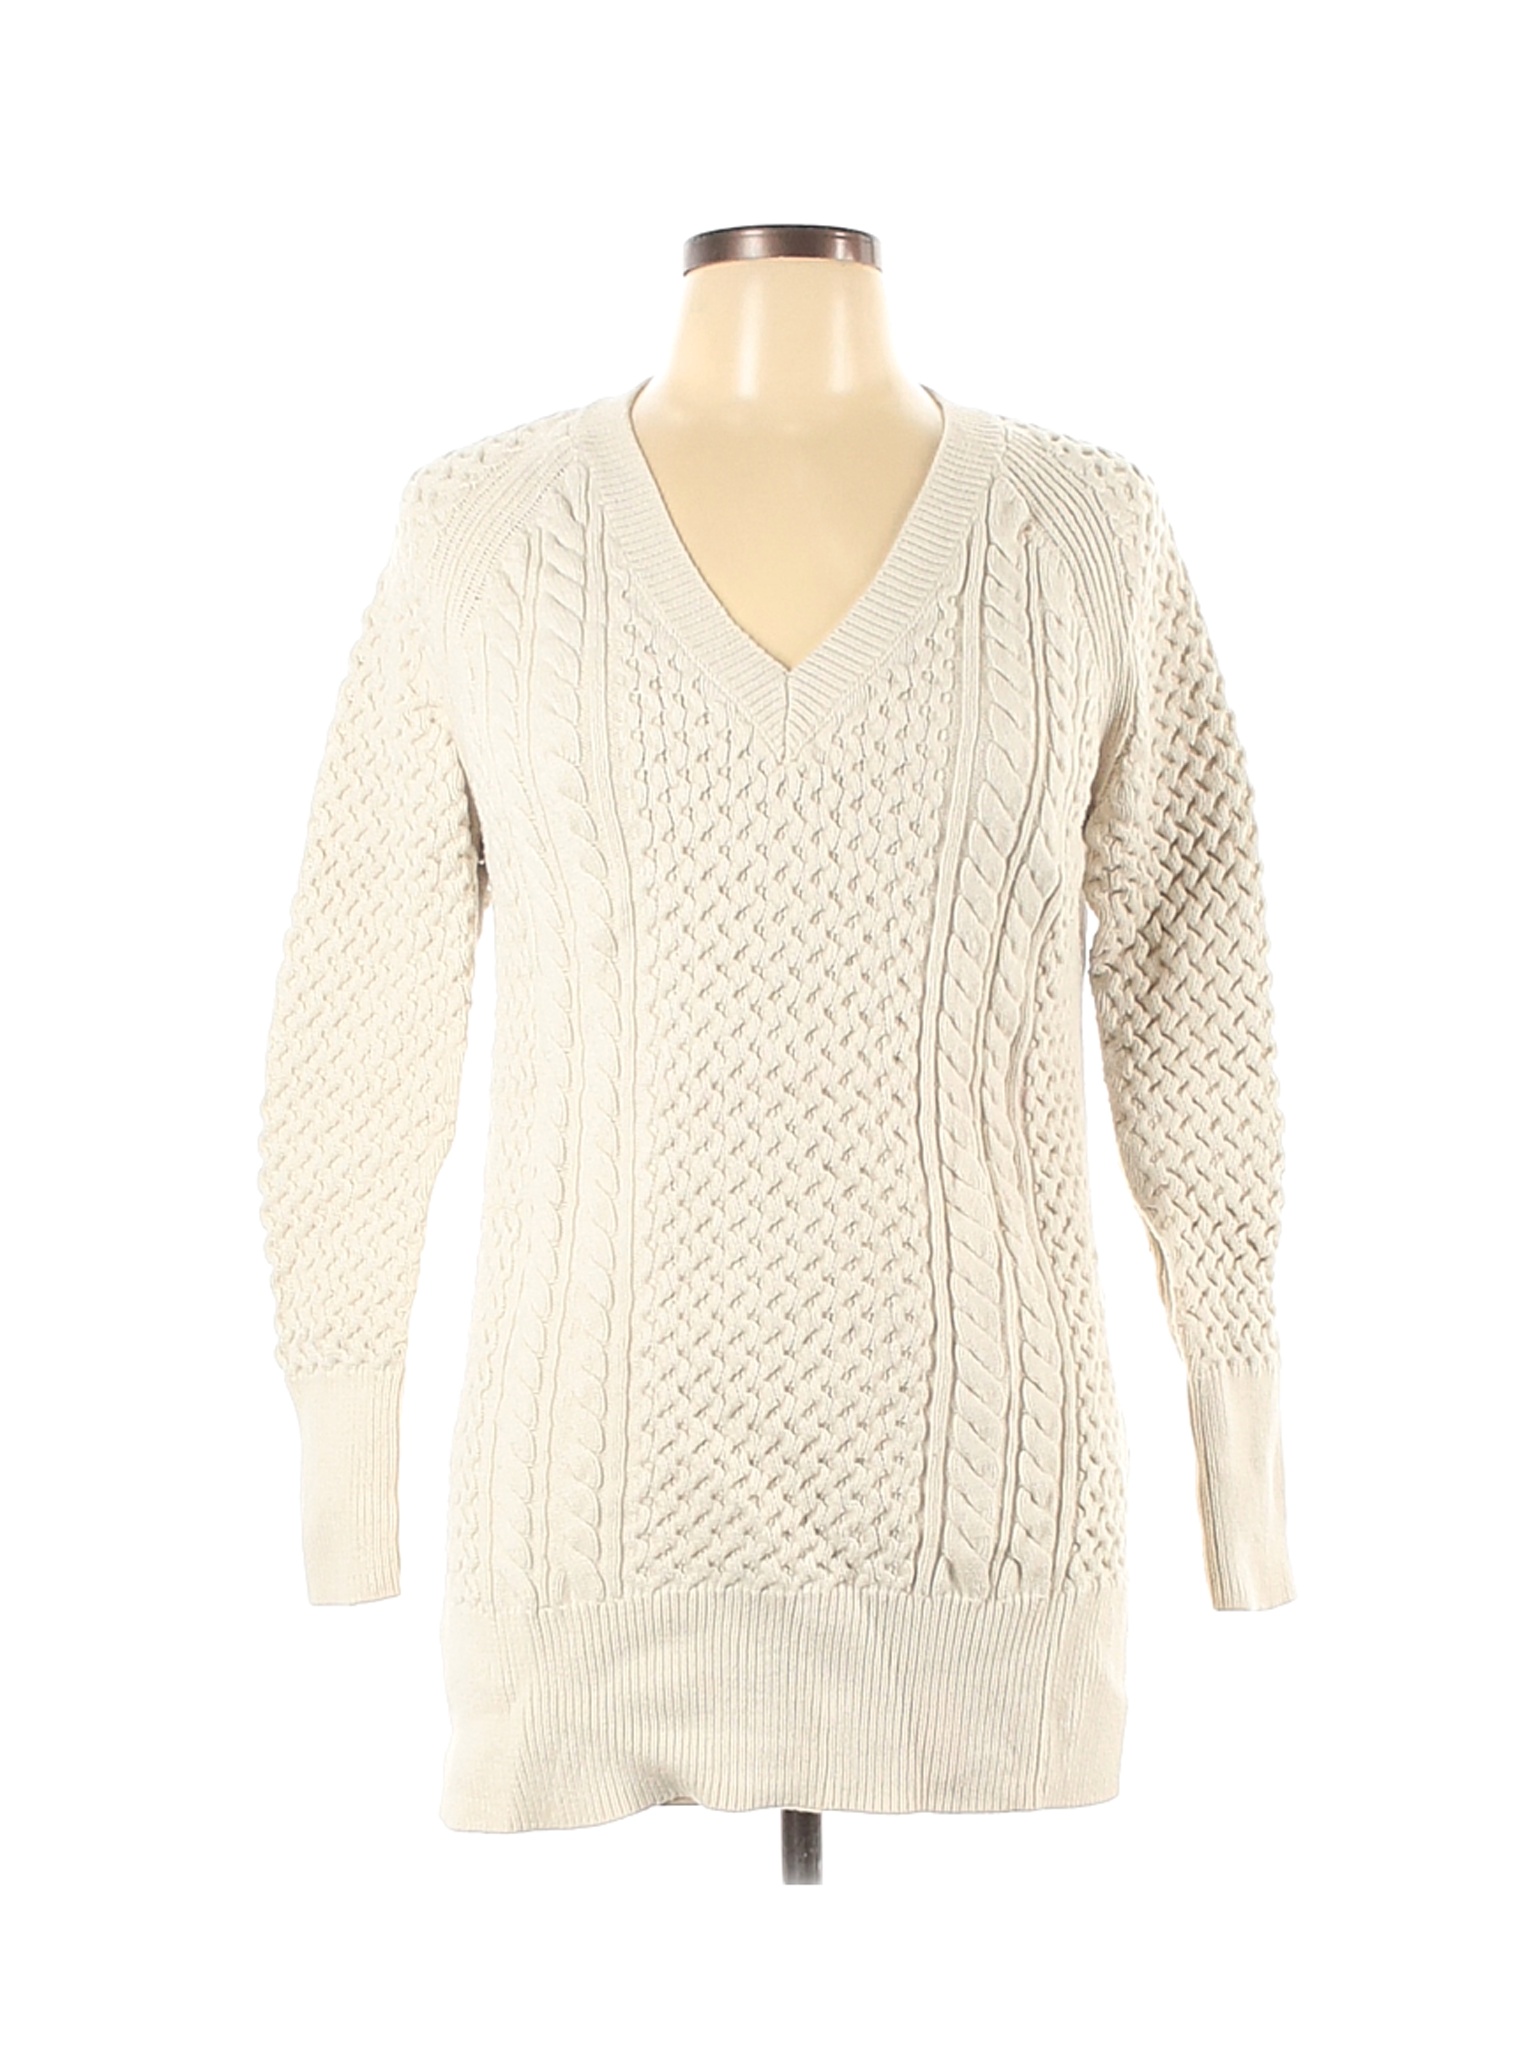 Banana Republic Women Ivory Pullover Sweater L | eBay